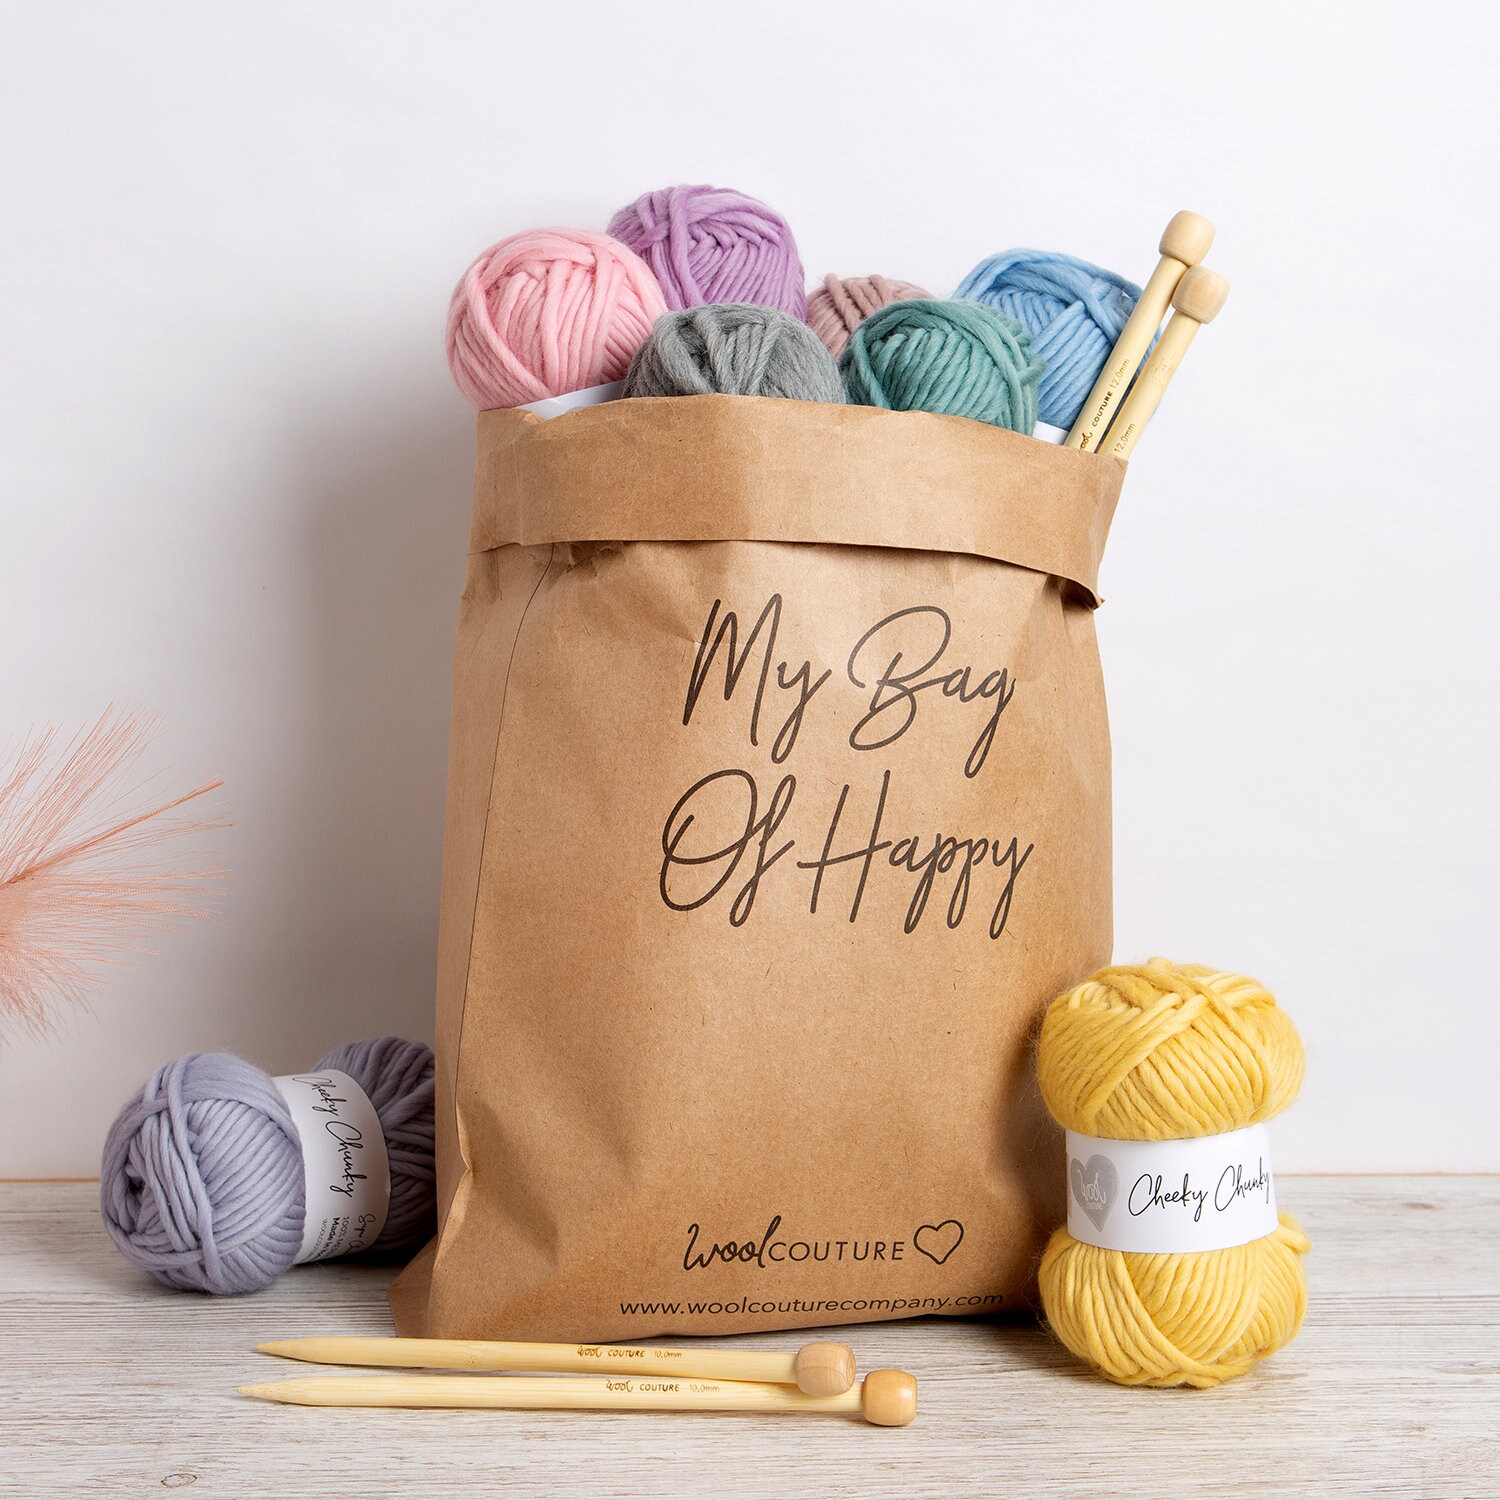 The Waiting Blanket - Crochet kit including pattern - Yummy Yarn